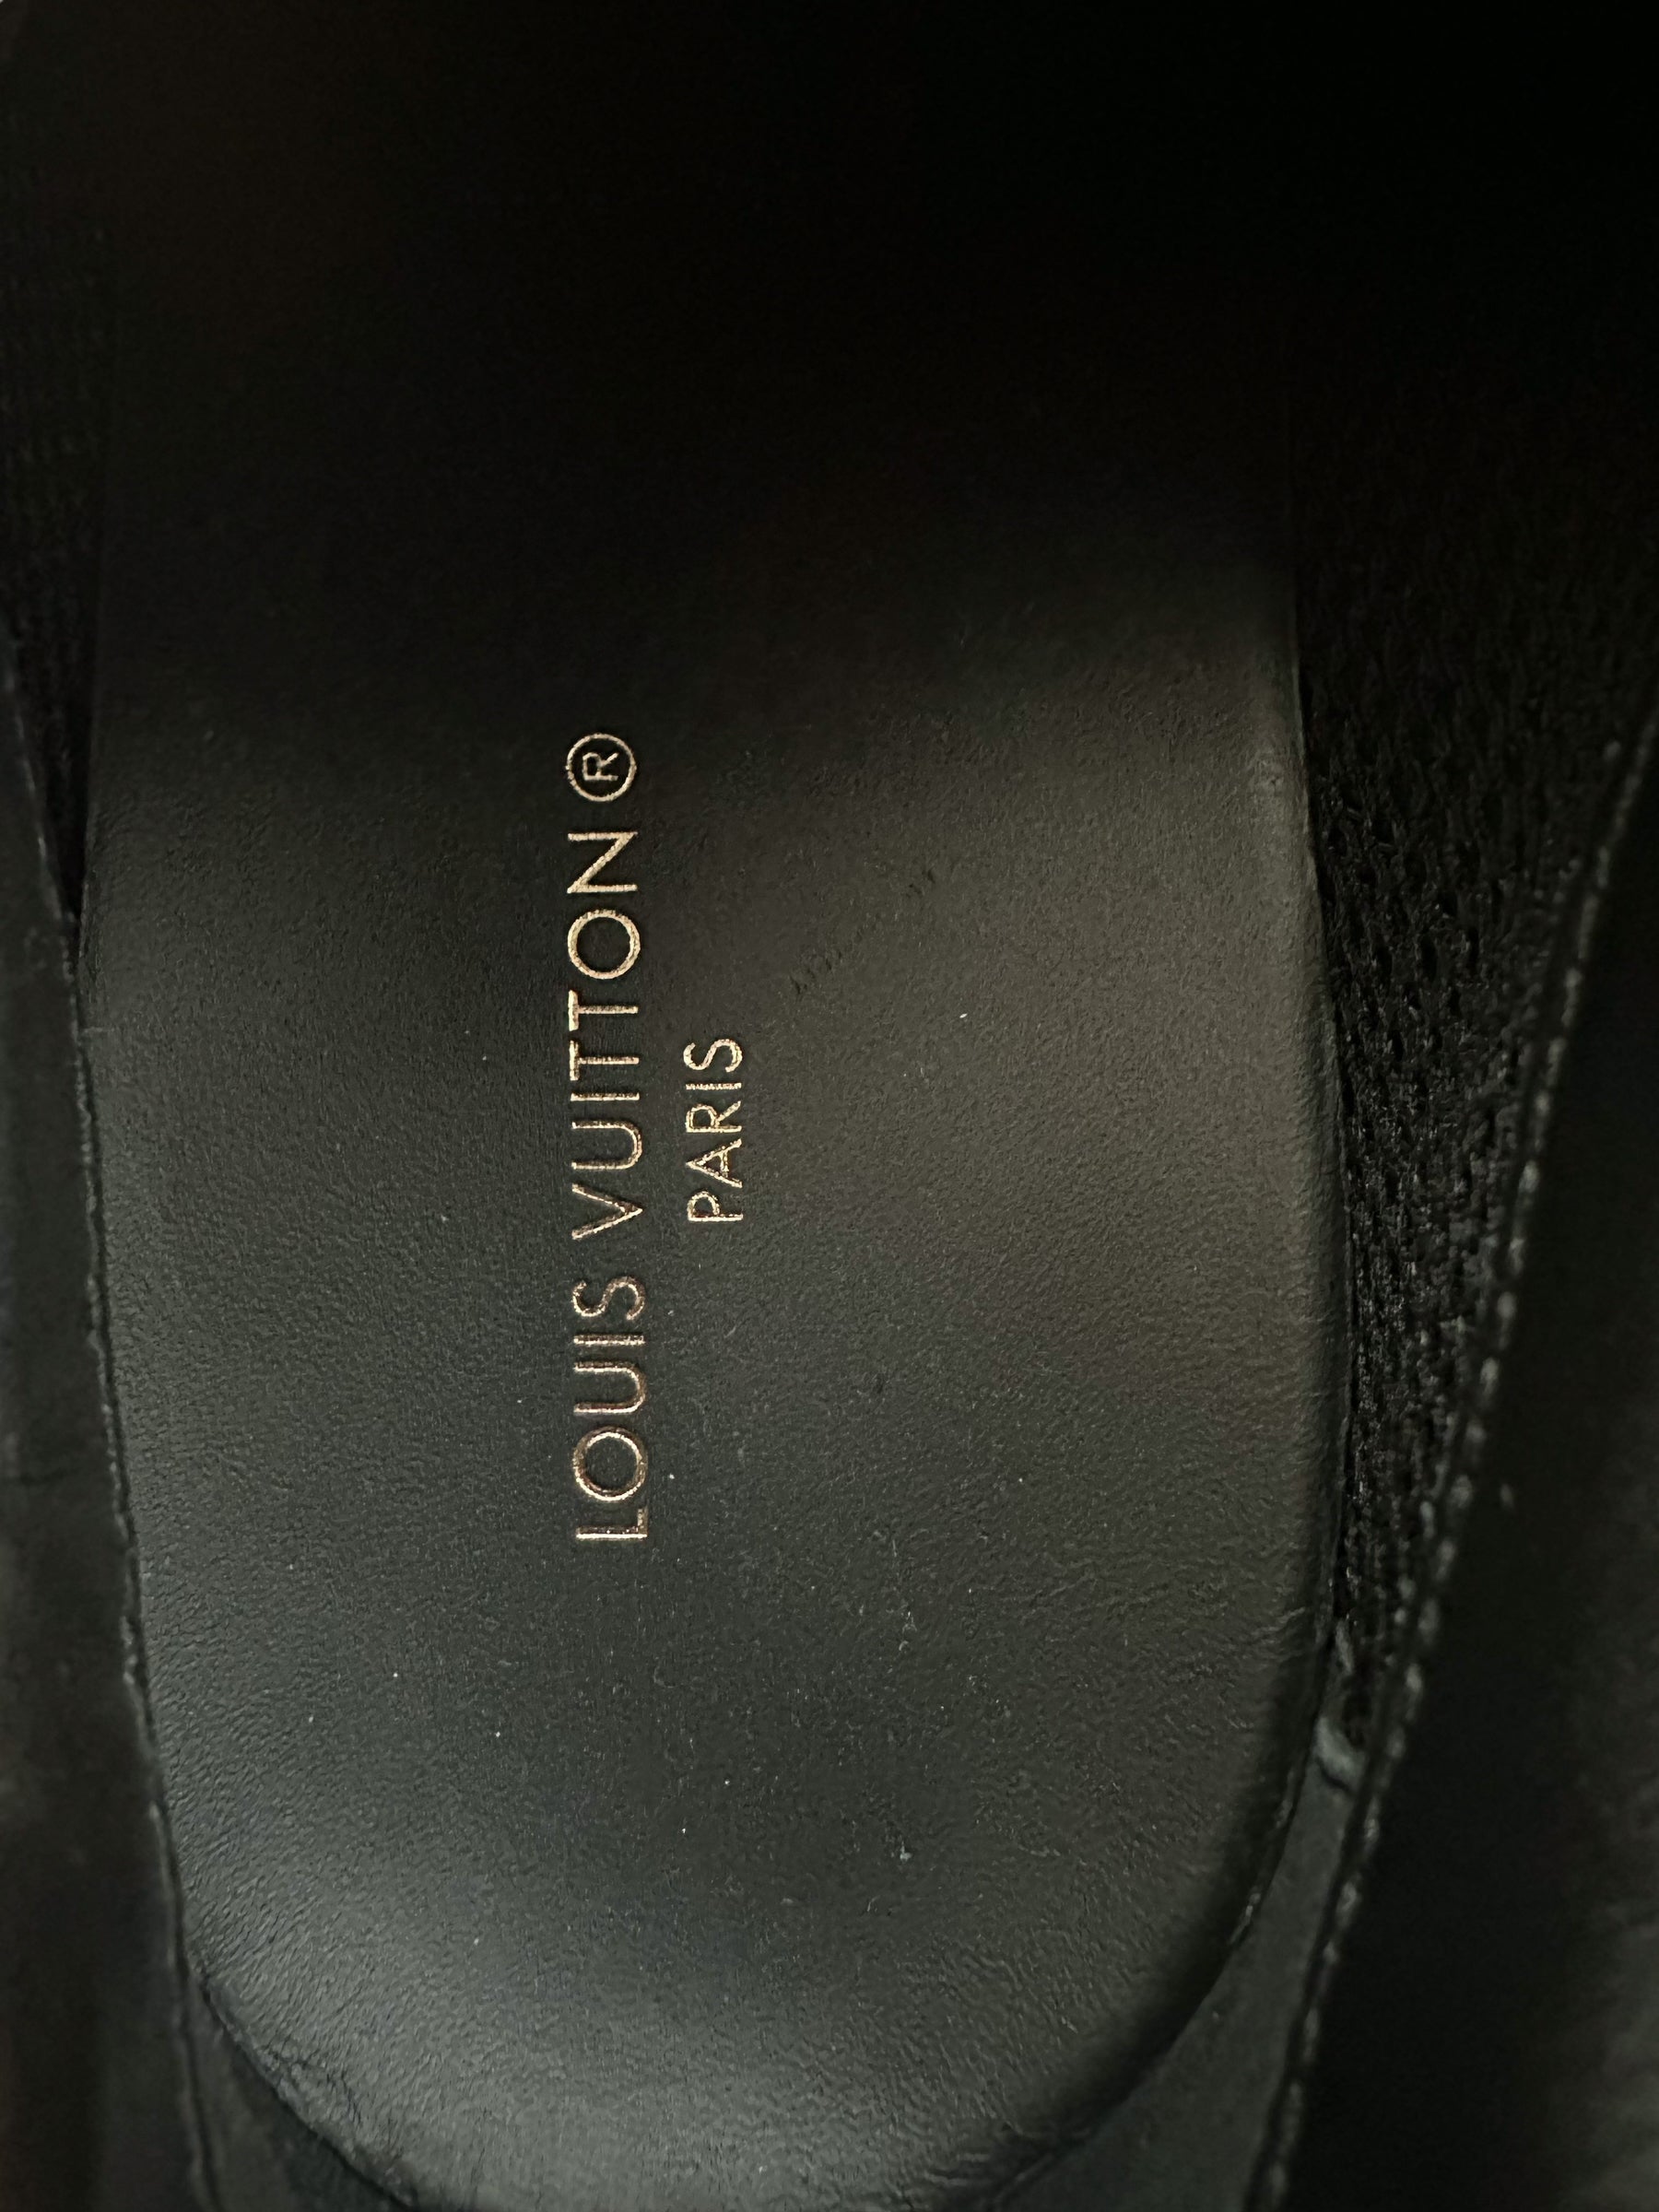 Louis Vuitton Run Away Sneaker Monogram Iridescent Black Size G7